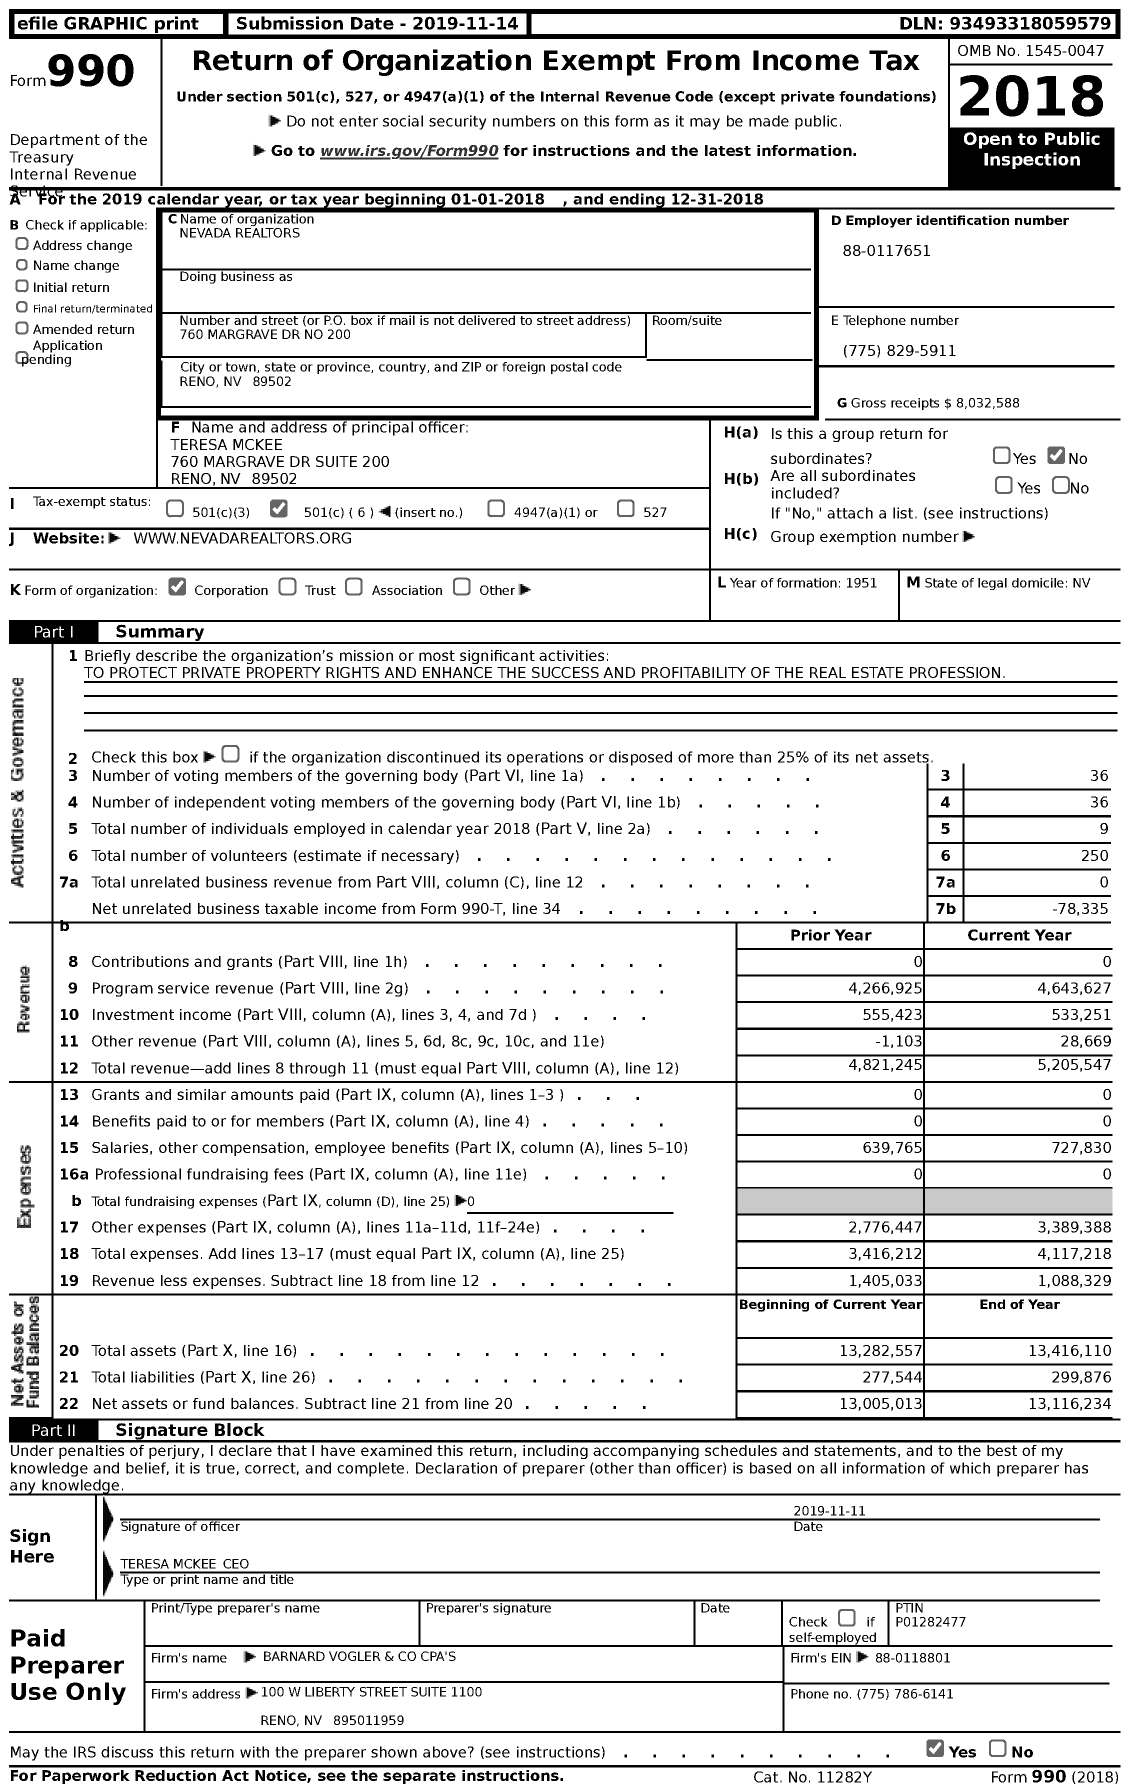 Image of first page of 2018 Form 990 for Nevada Realtors (NVAR)